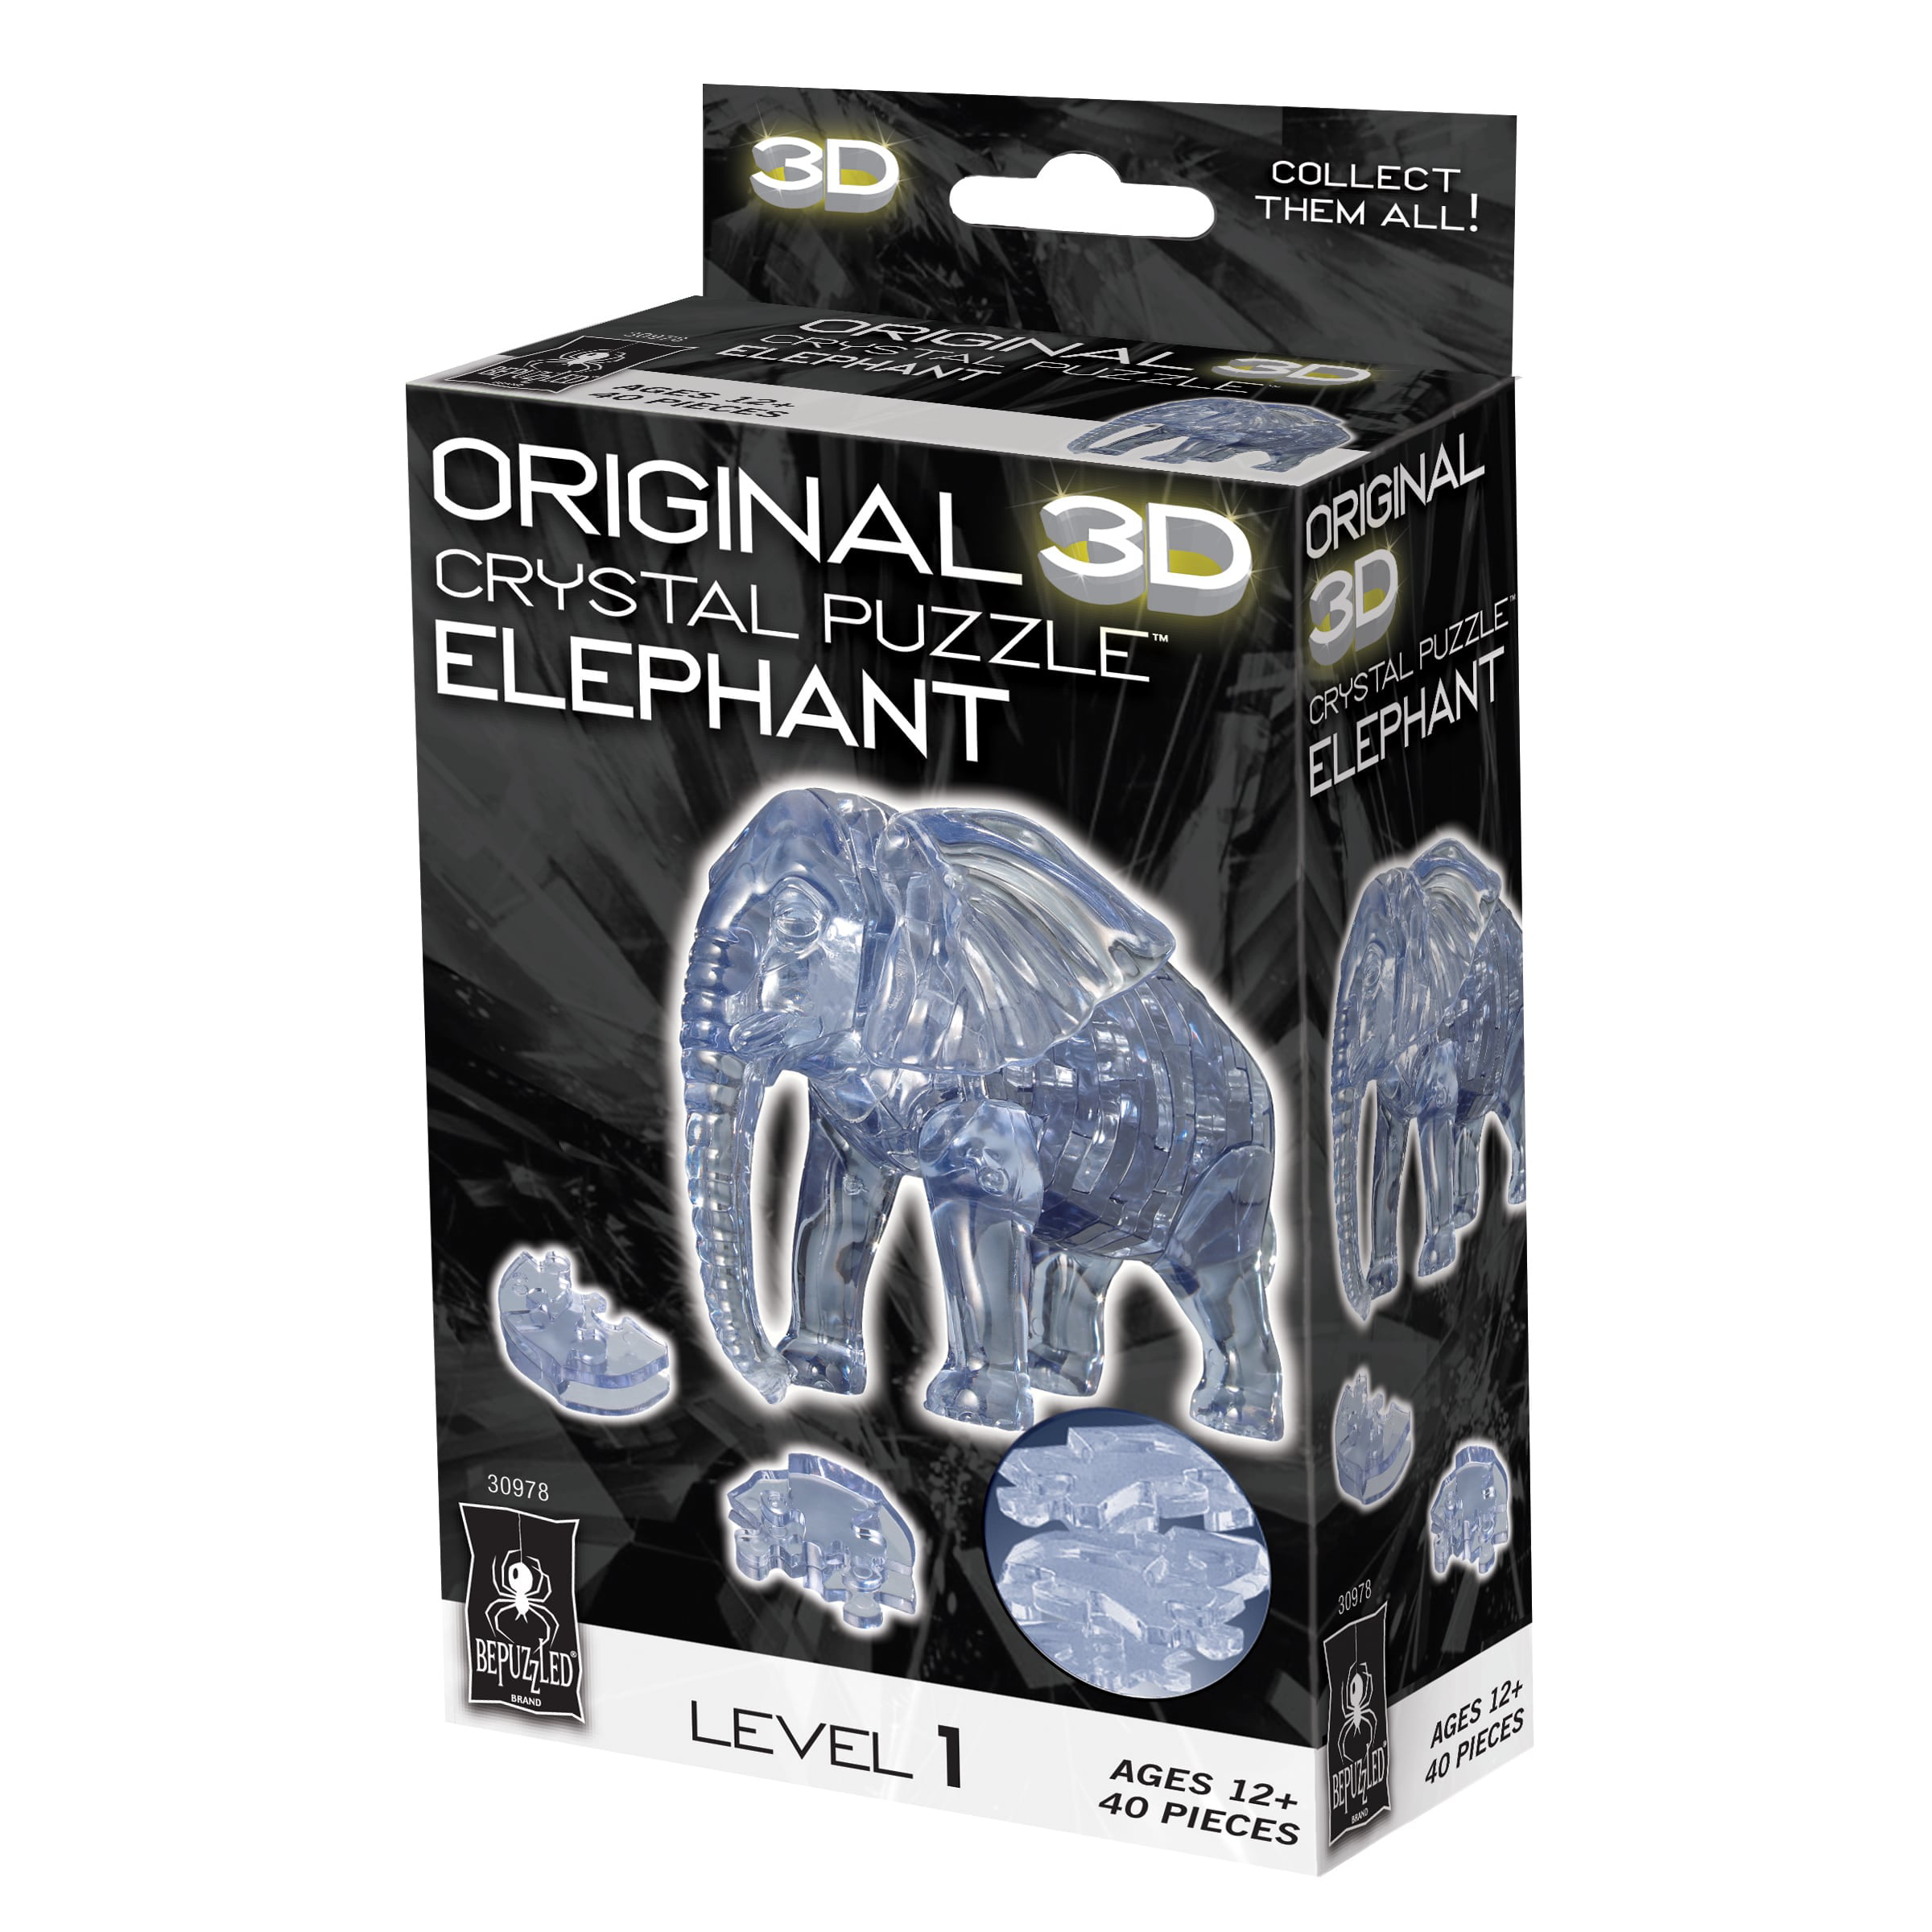 Standard 3D Crystal Puzzle - Elephant